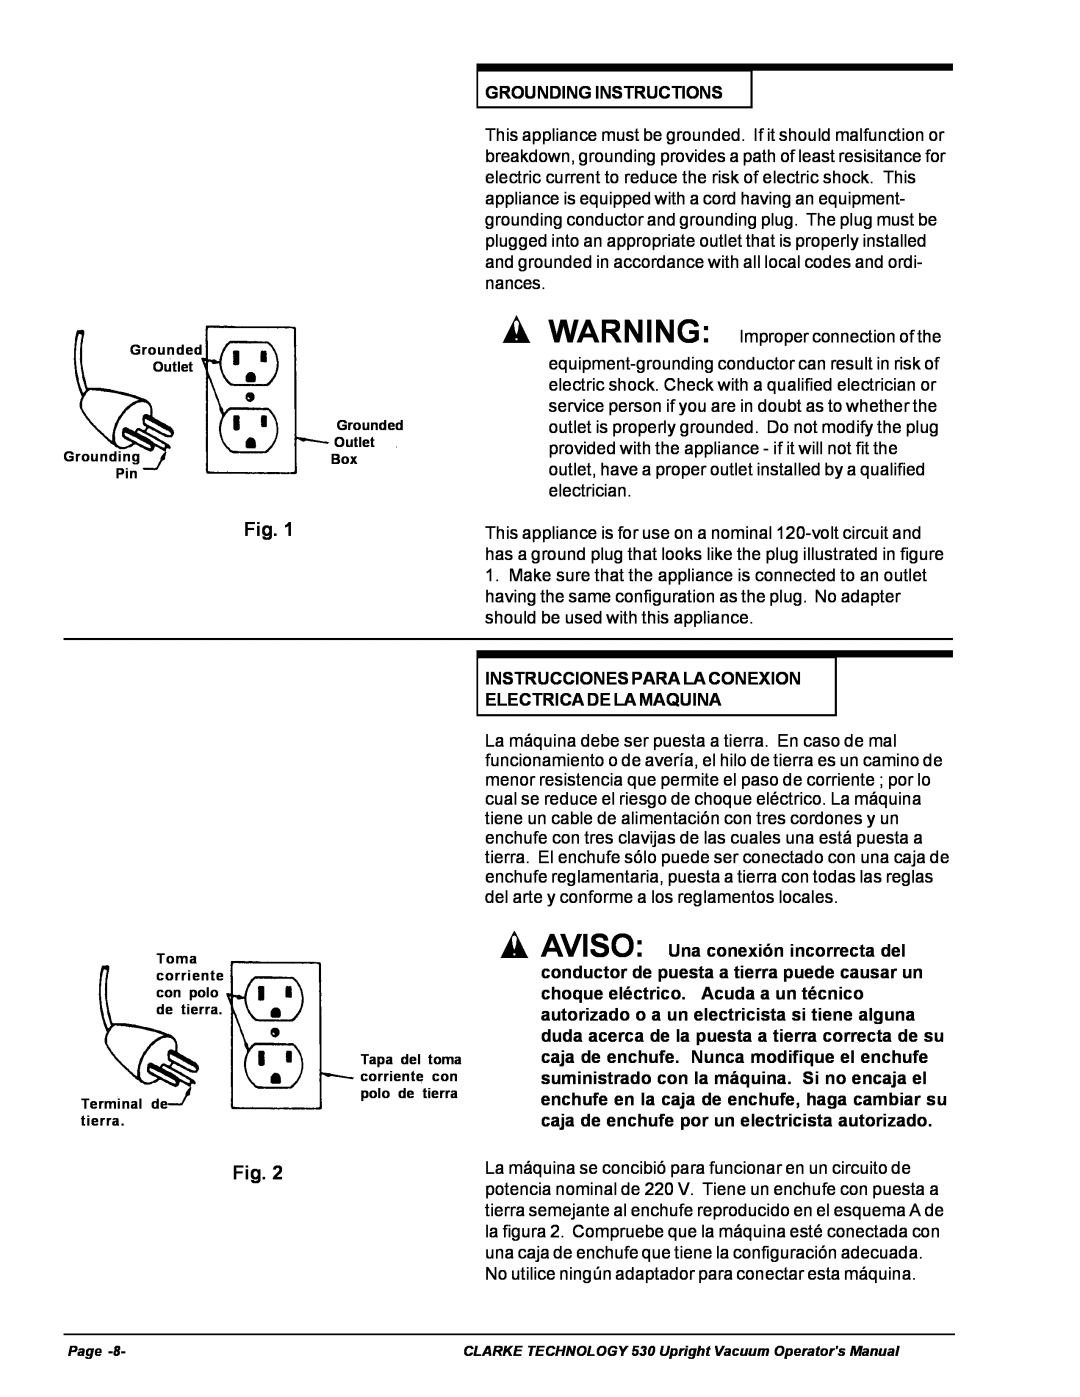 Nilfisk-ALTO 530cc manual Grounding Instructions, Instrucciones Para La Conexion, Electrica De La Maquina 